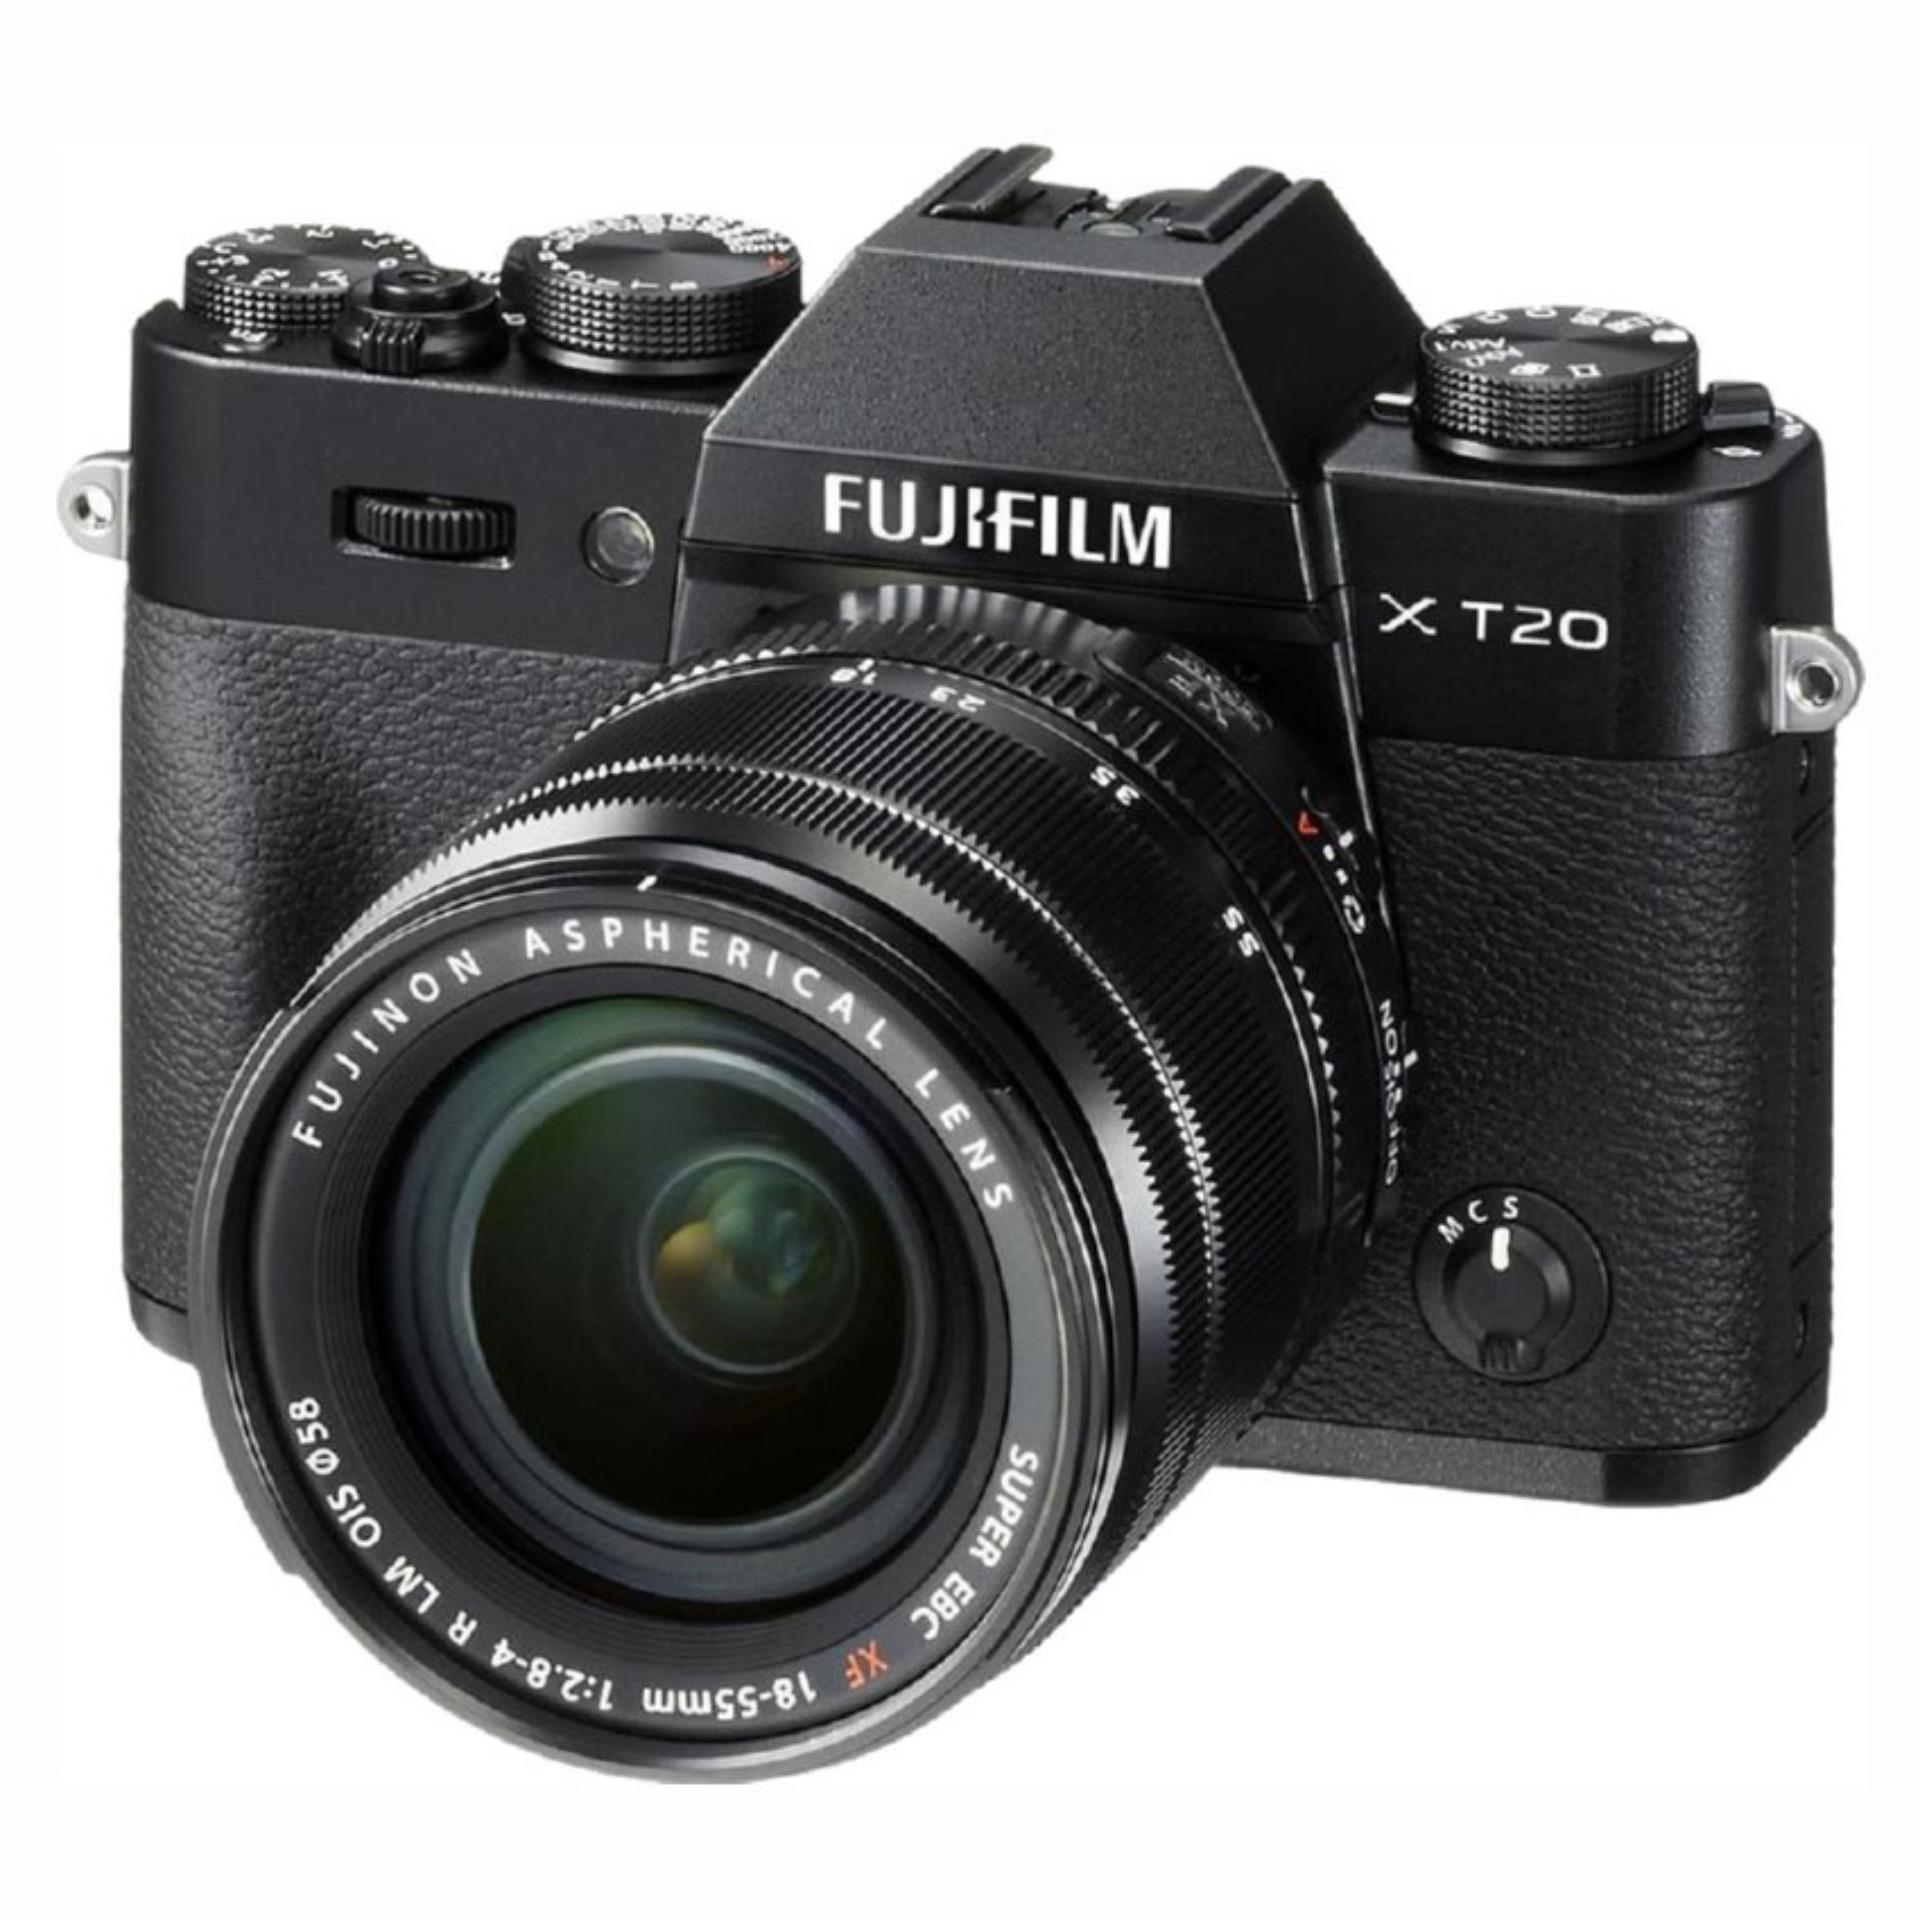 Fujifilm X-T20 (Black) Mirrorless Digital Camera + Fujinon XF 18-55mm Lens